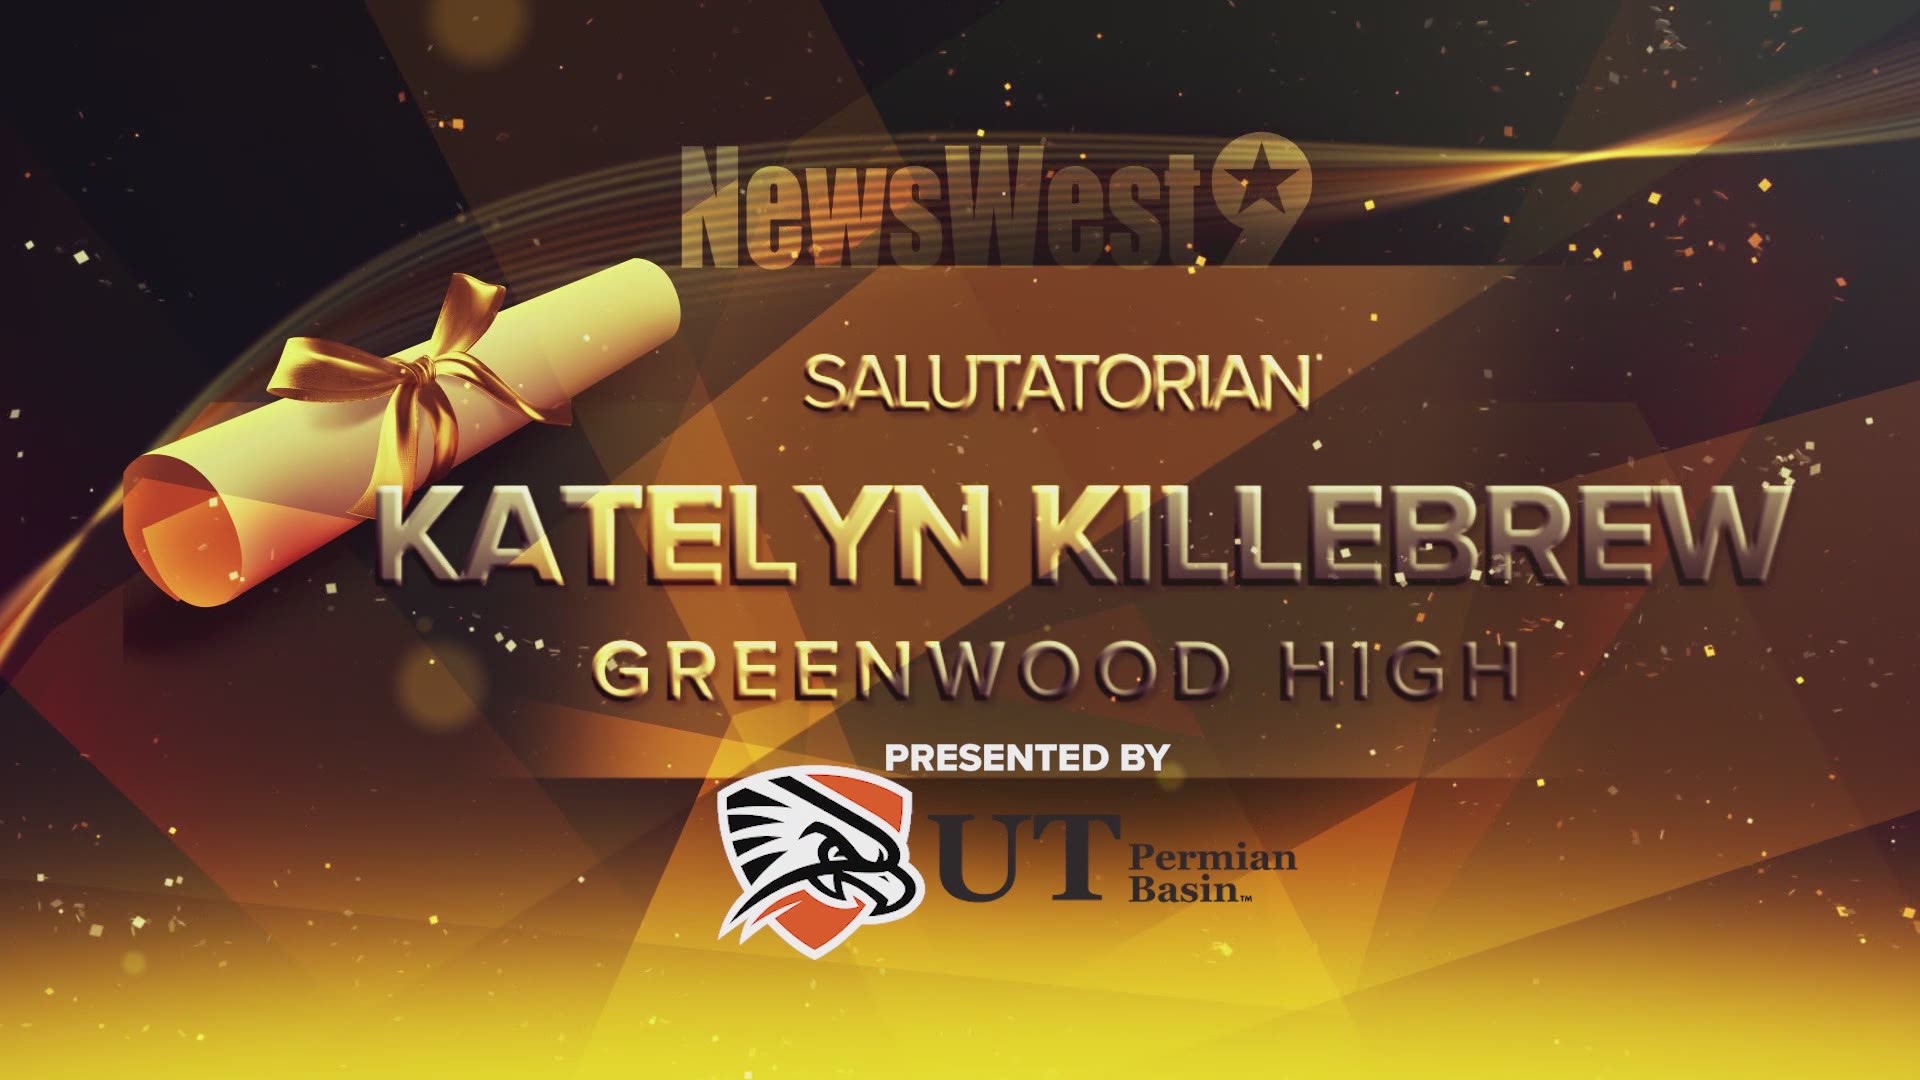 Katelyn Killebrew delivers the Salutatorian speech for Greenwood High